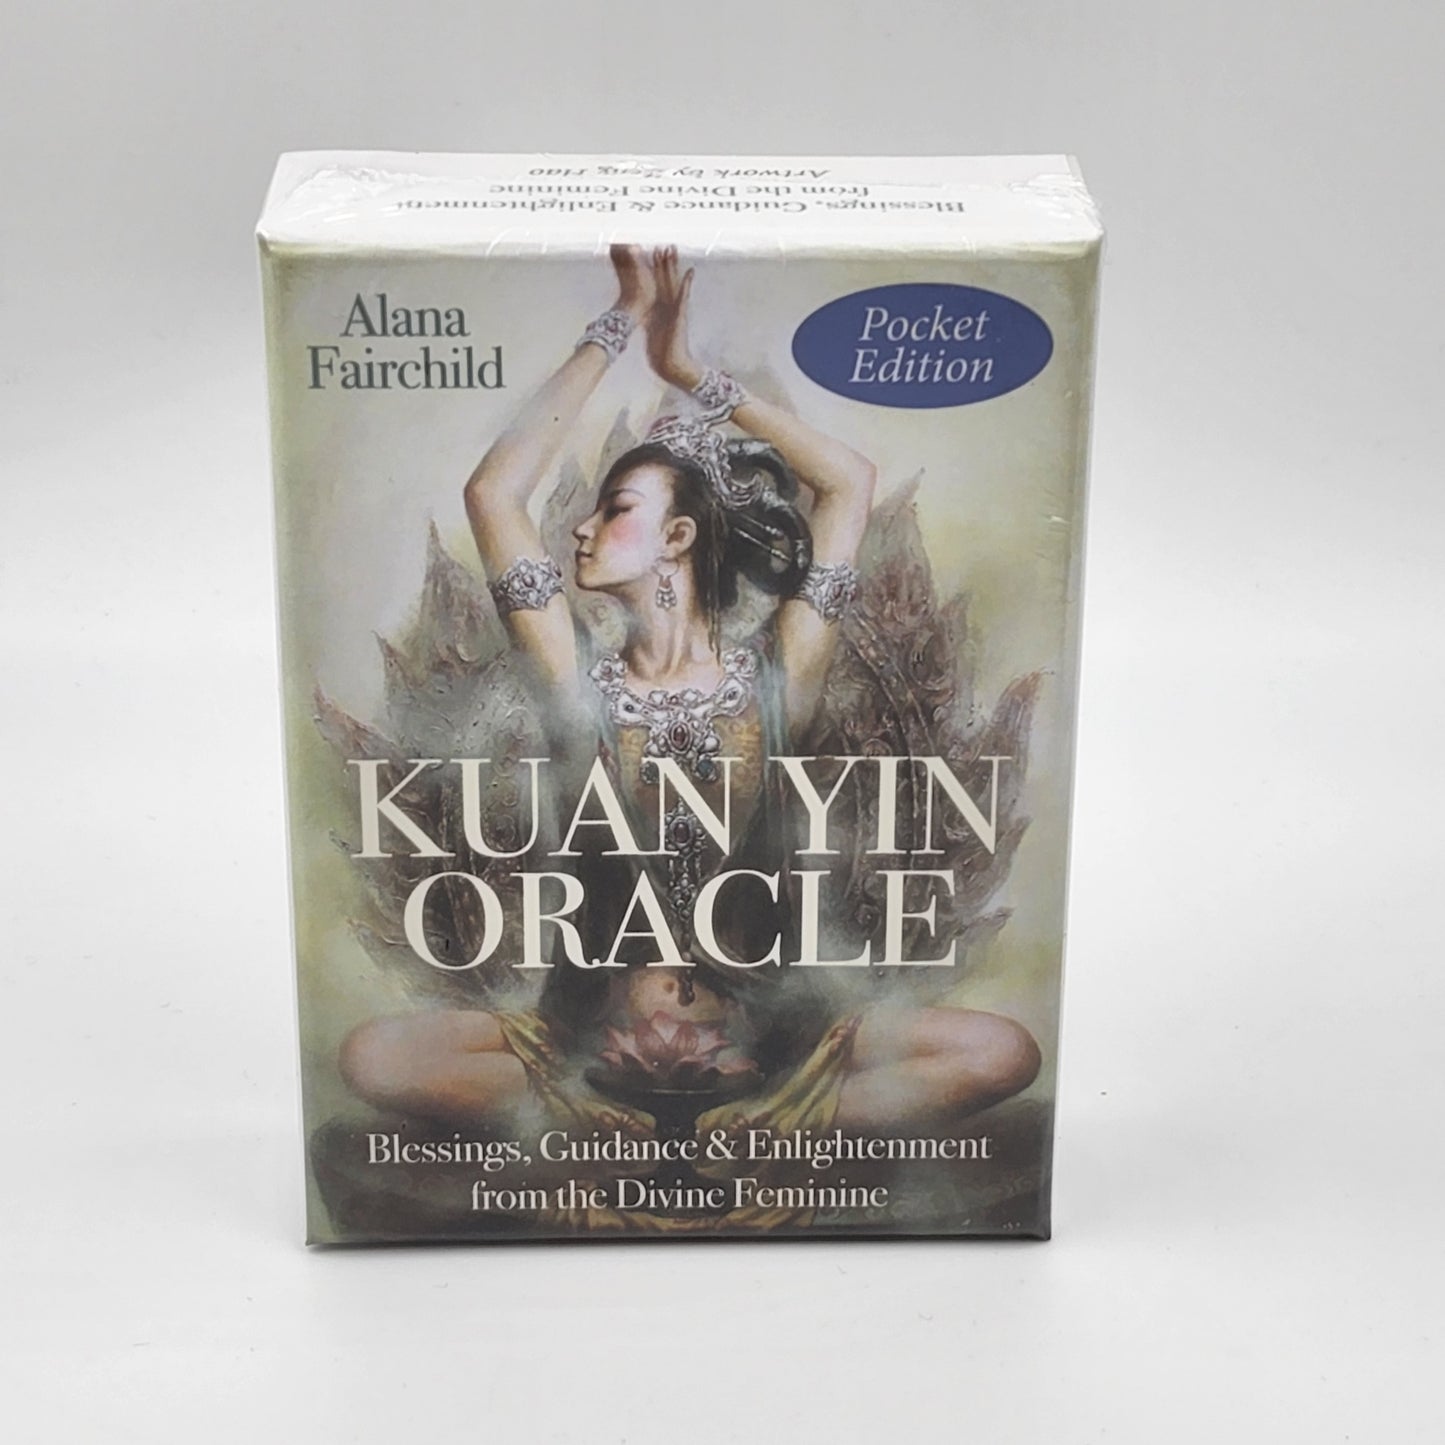 Kuan Yin Oracle Cards